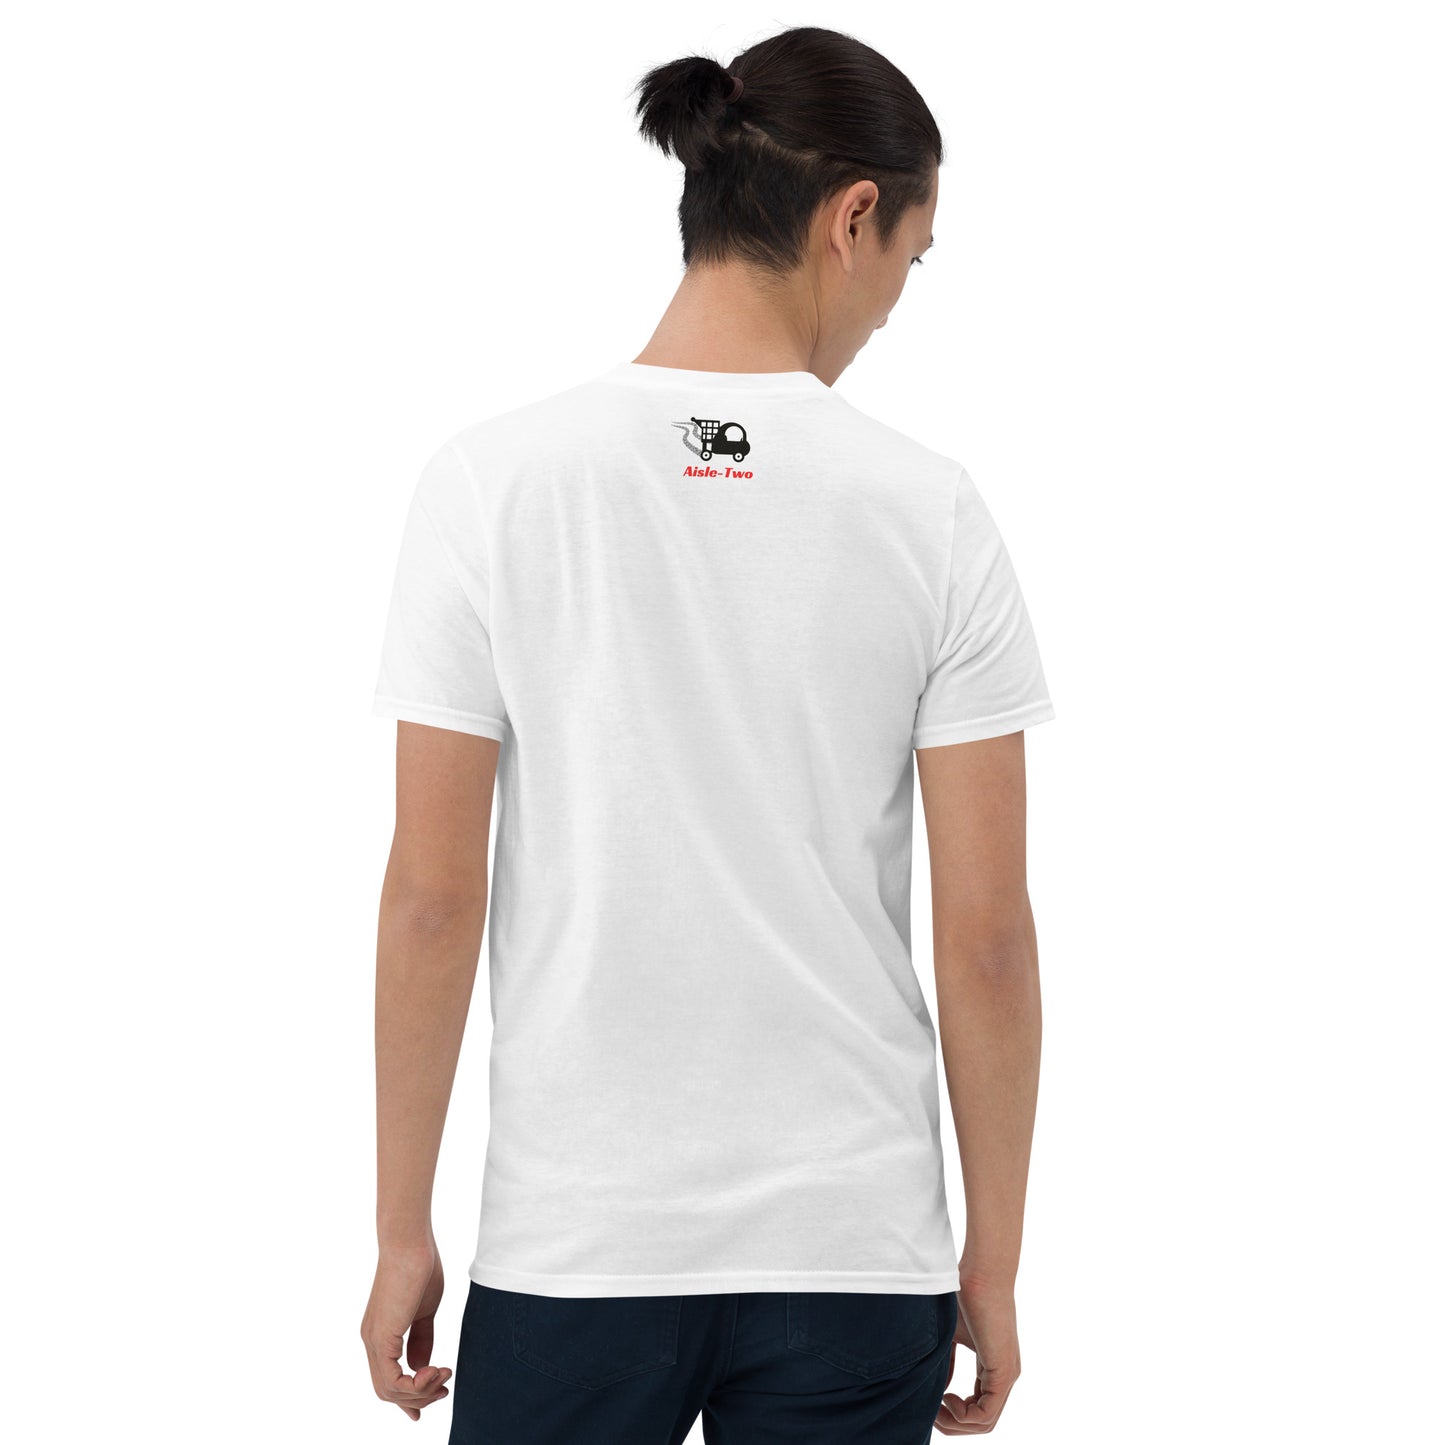 “AISLE-TWO” T-Shirt